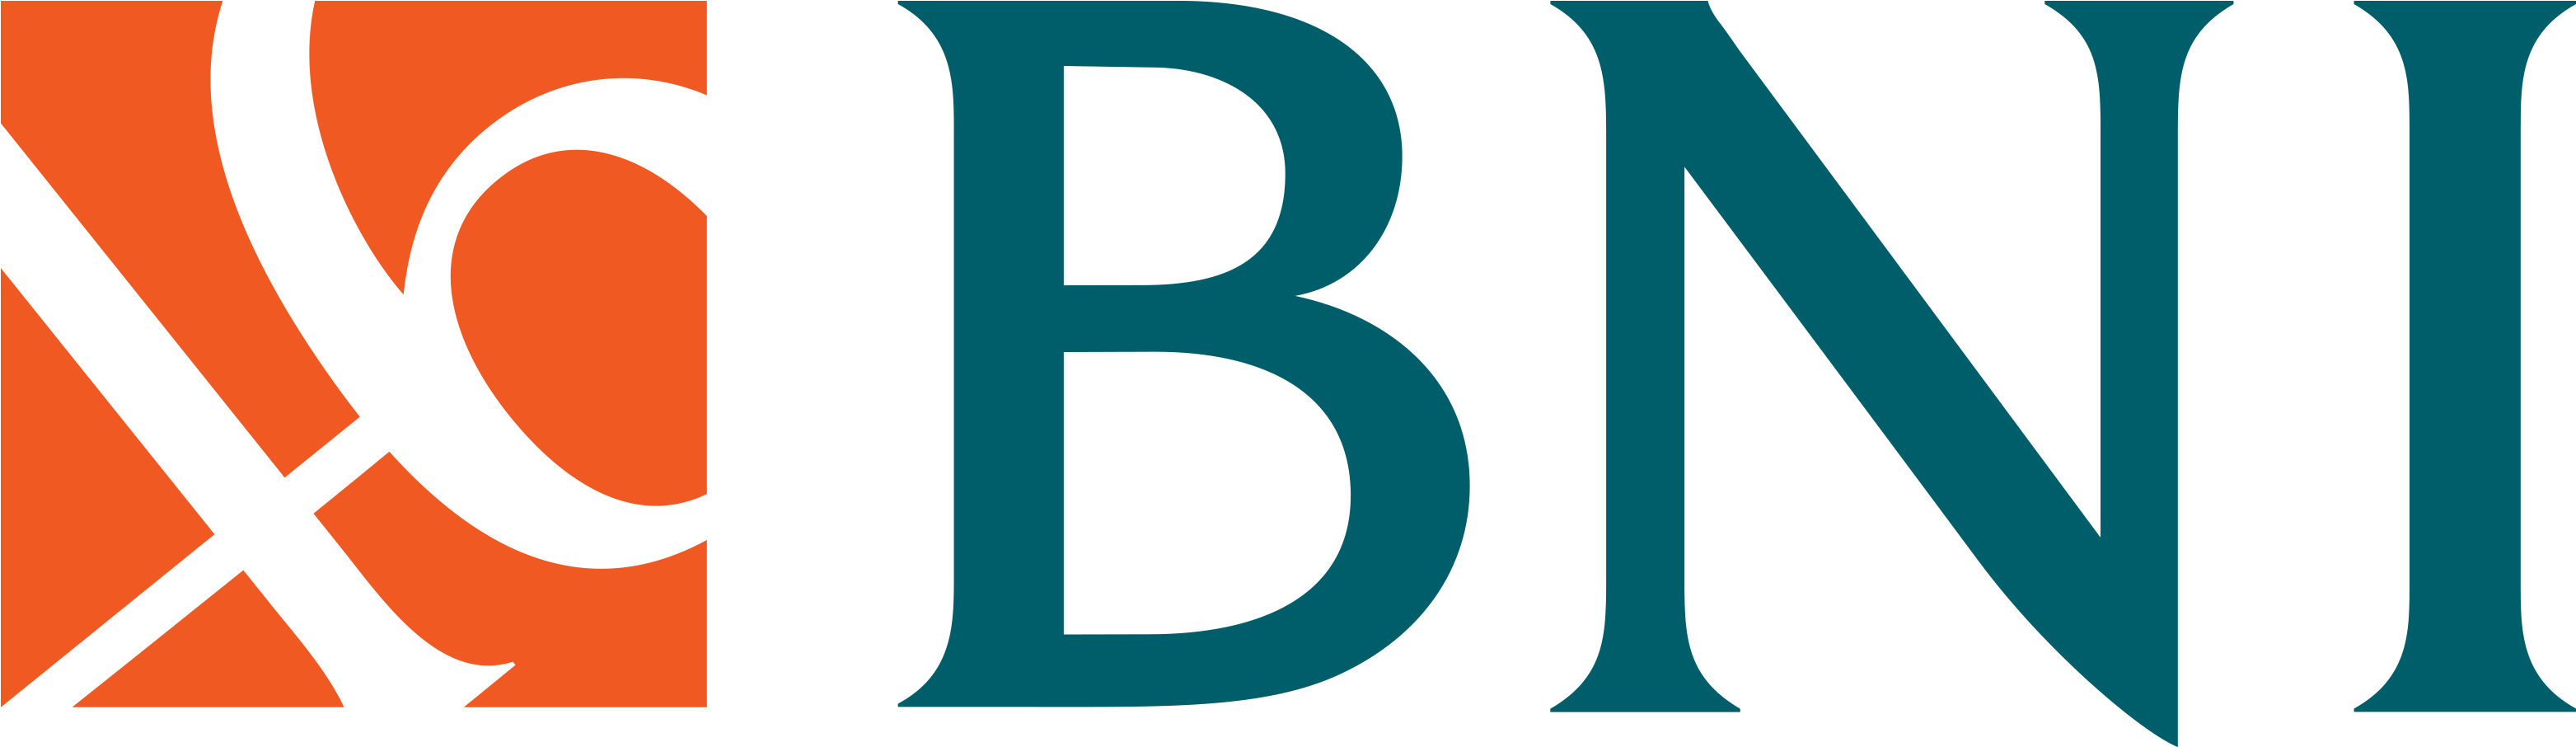 bank-negara-indonesia-logo-bank-bni-transparan-clipart